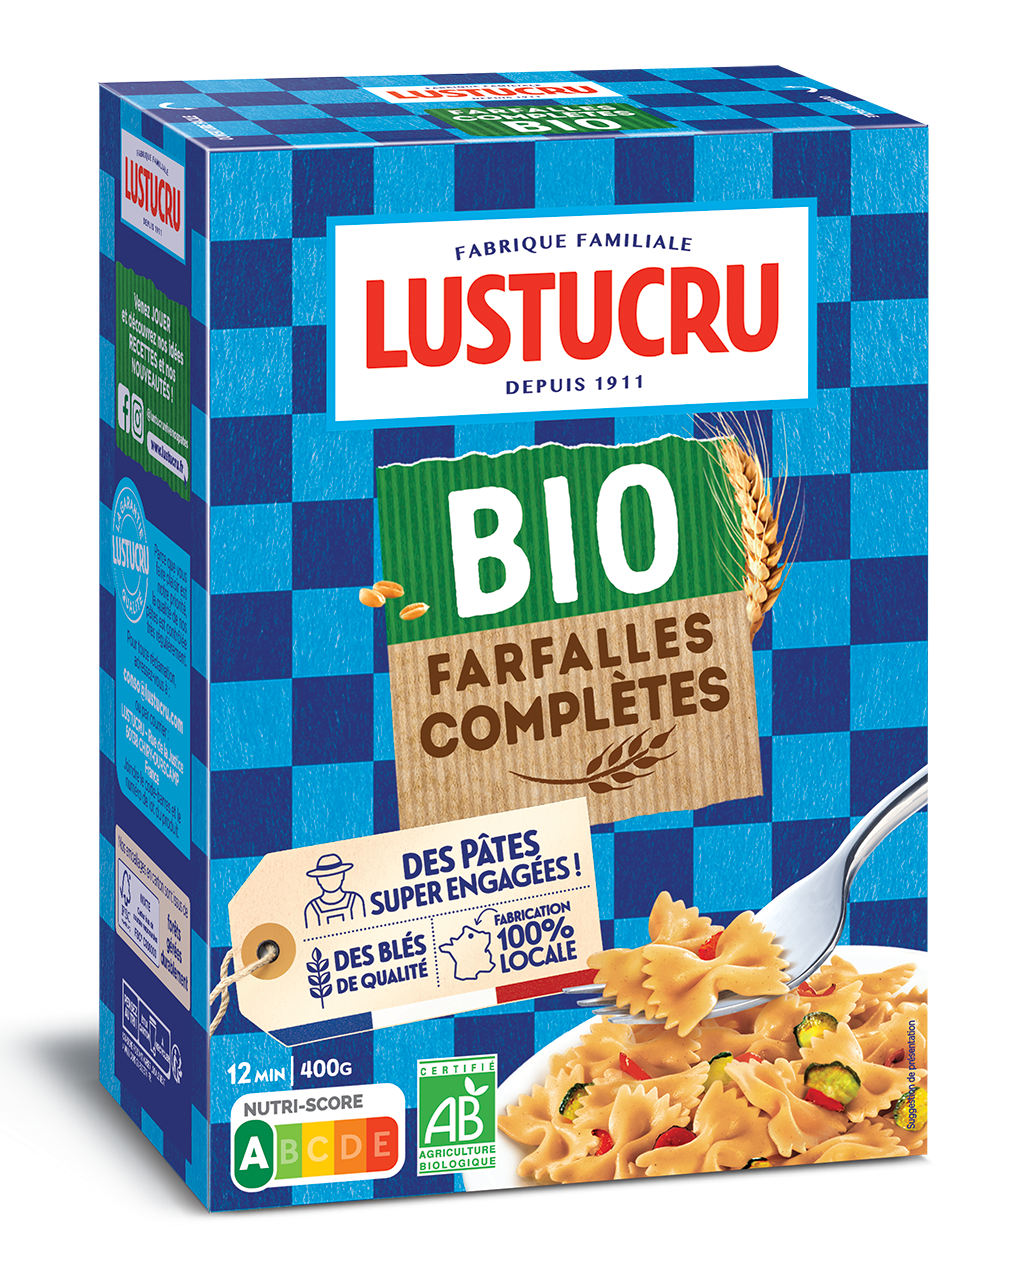 Lustucru Farfalles Completes Bio - Lustucru élargit sa gamme Bio